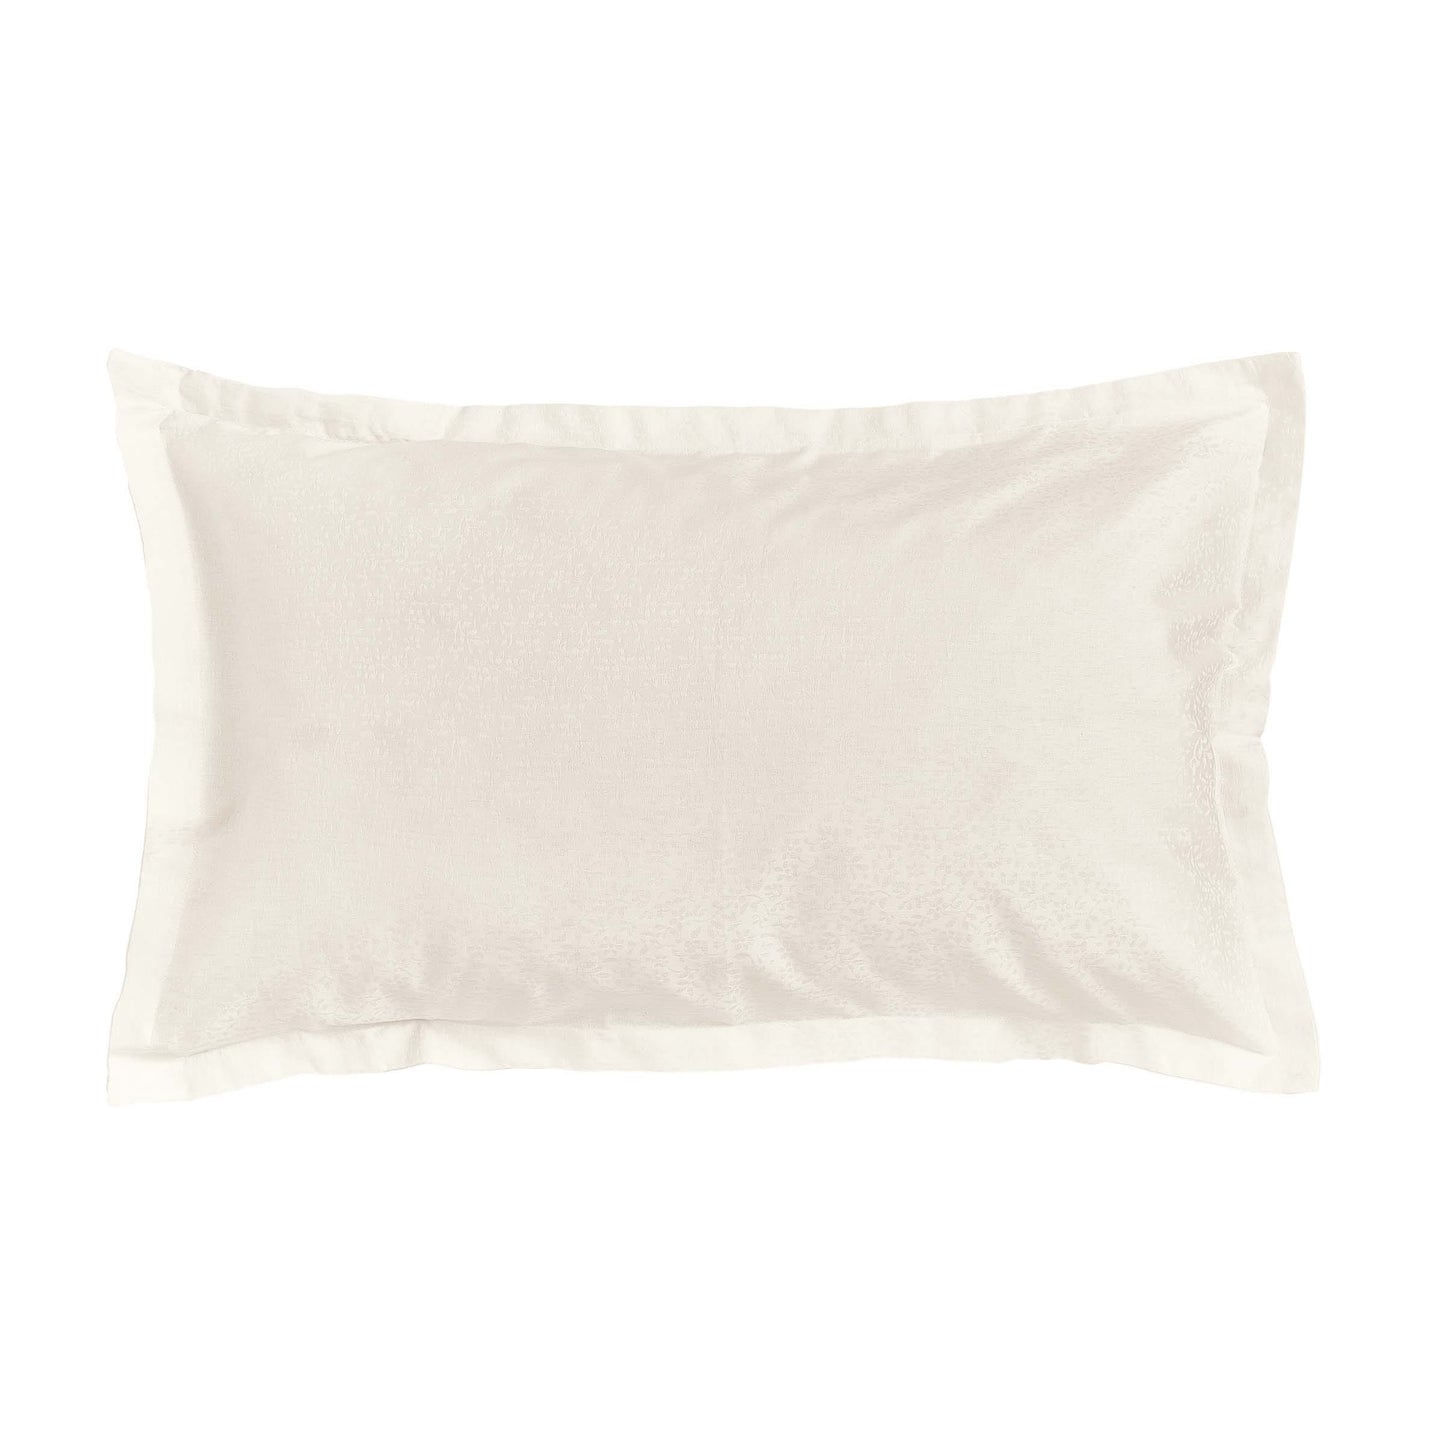 Ivory Jacquard Patterned Murmur Oxford Pillowcase